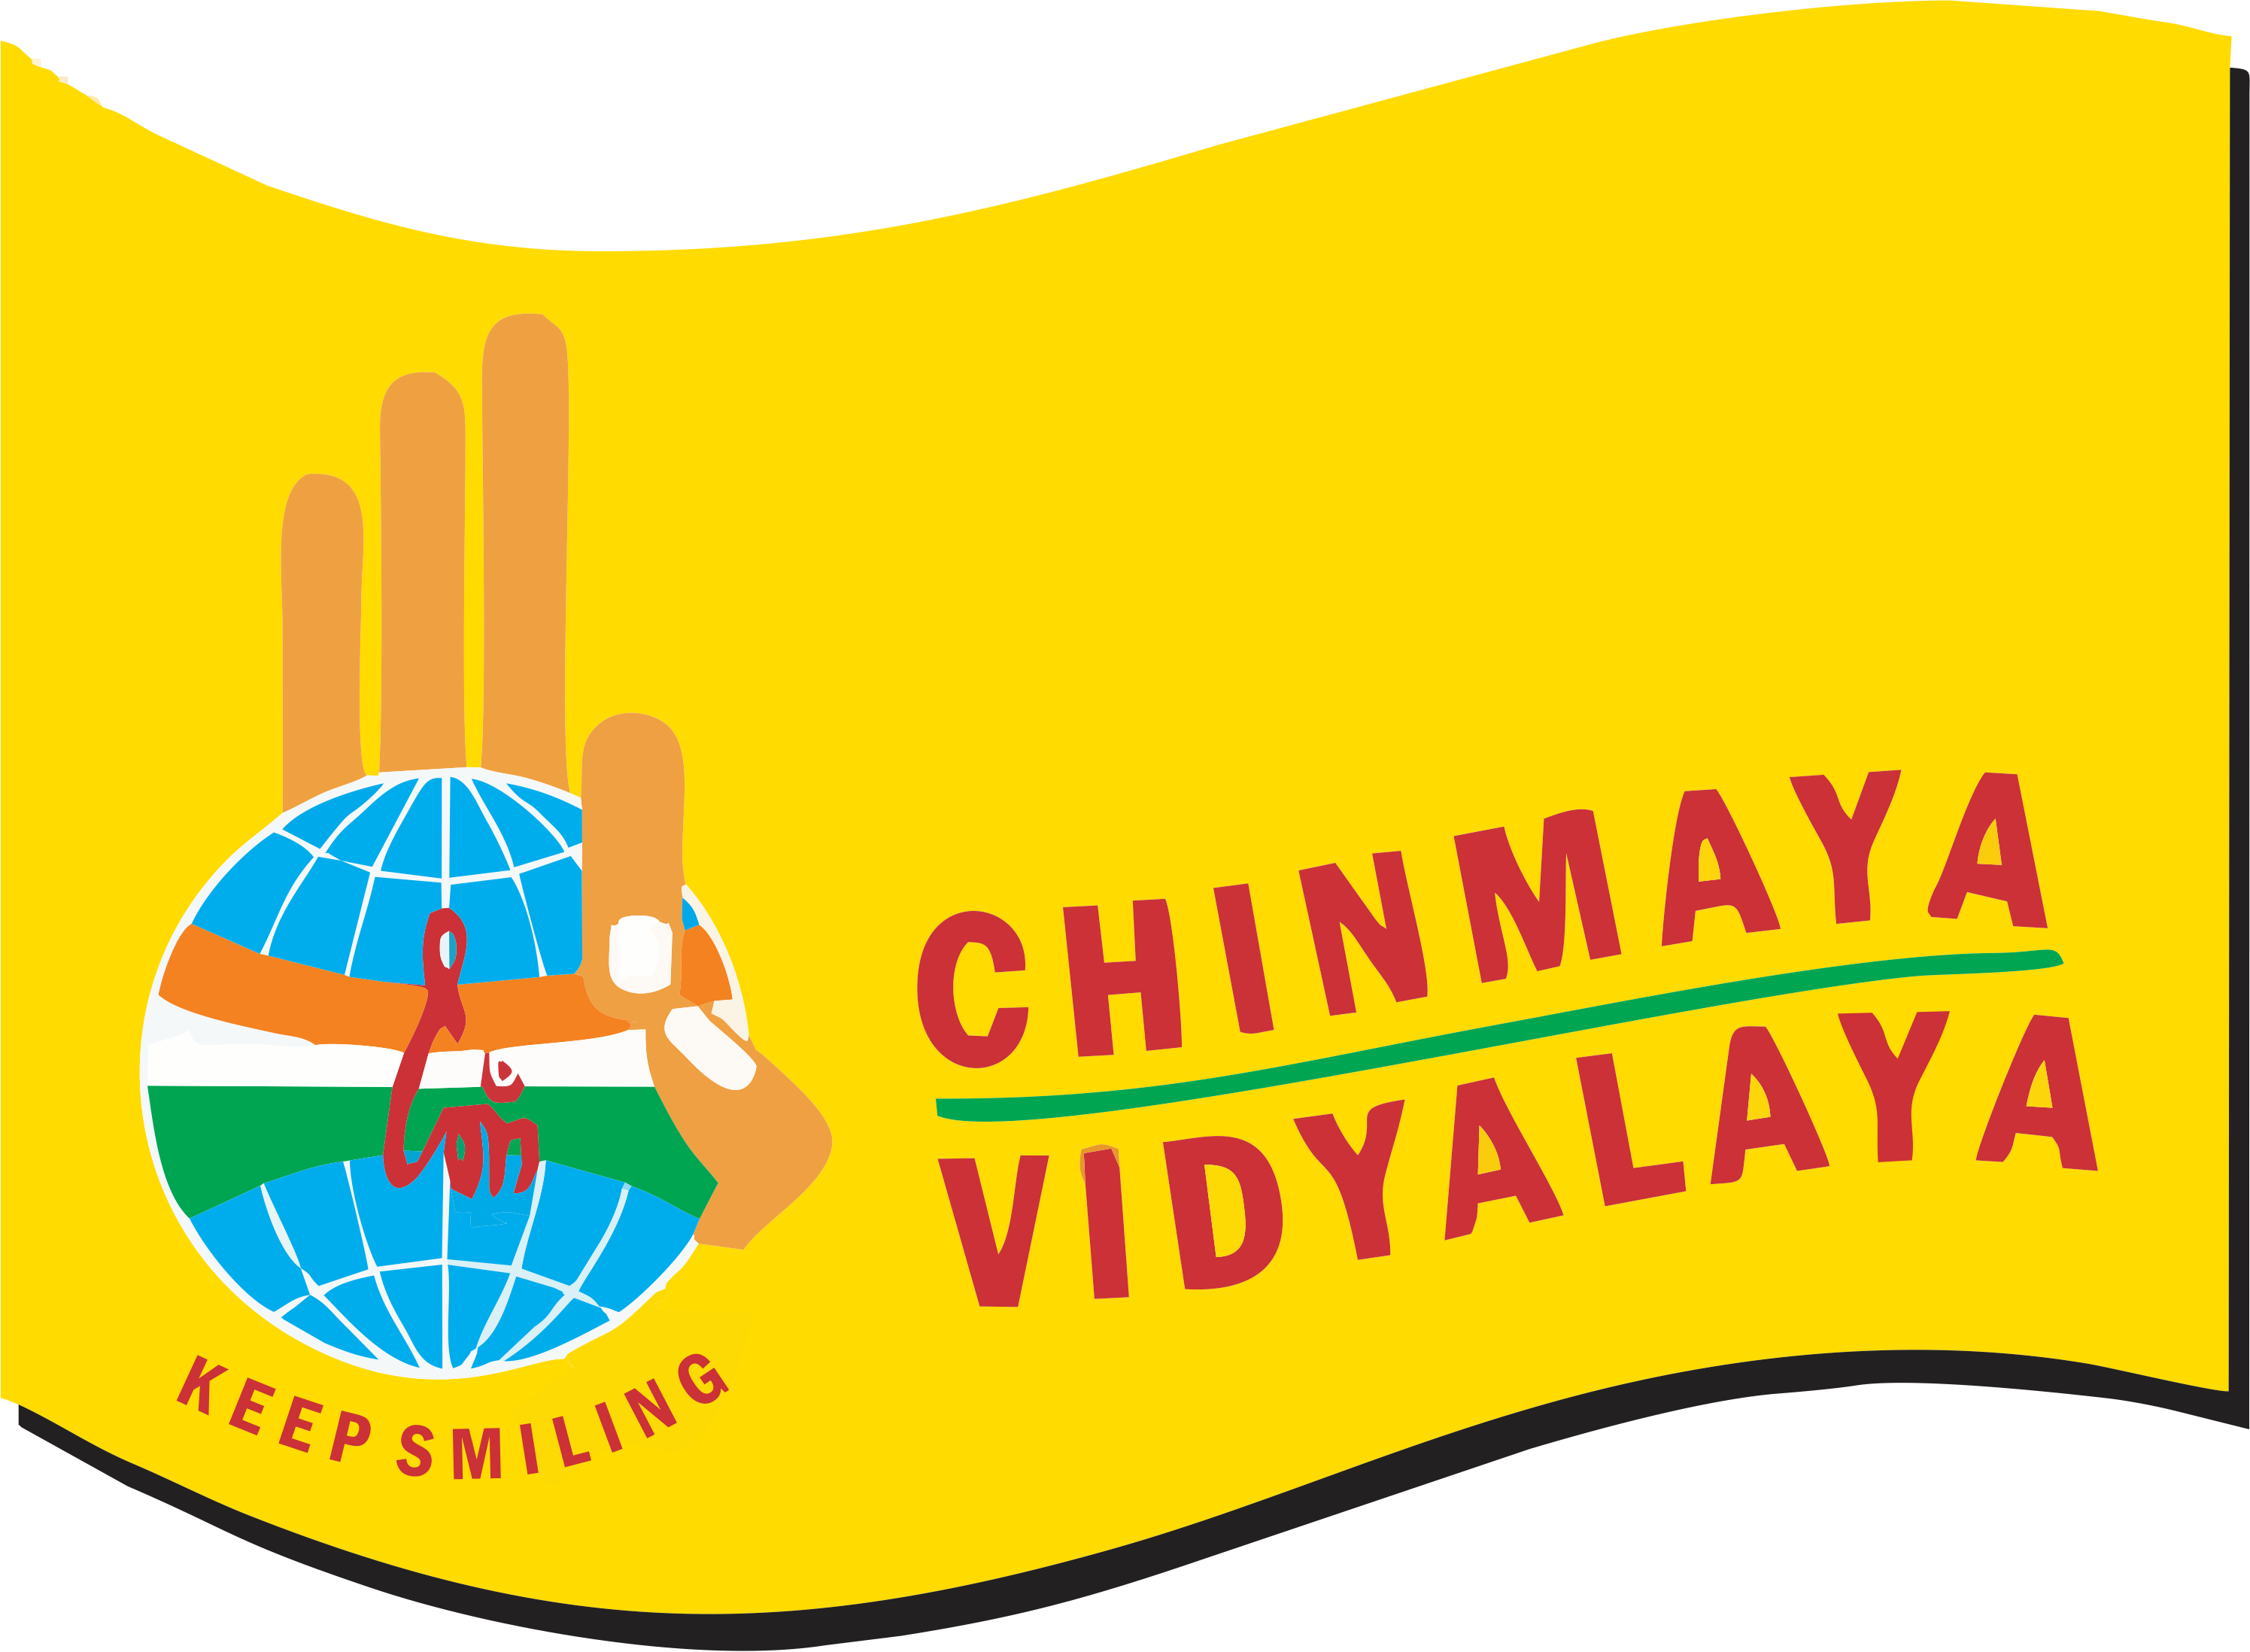 Chinmaya Vidyalaya, Shimla | Boarding Schools of India